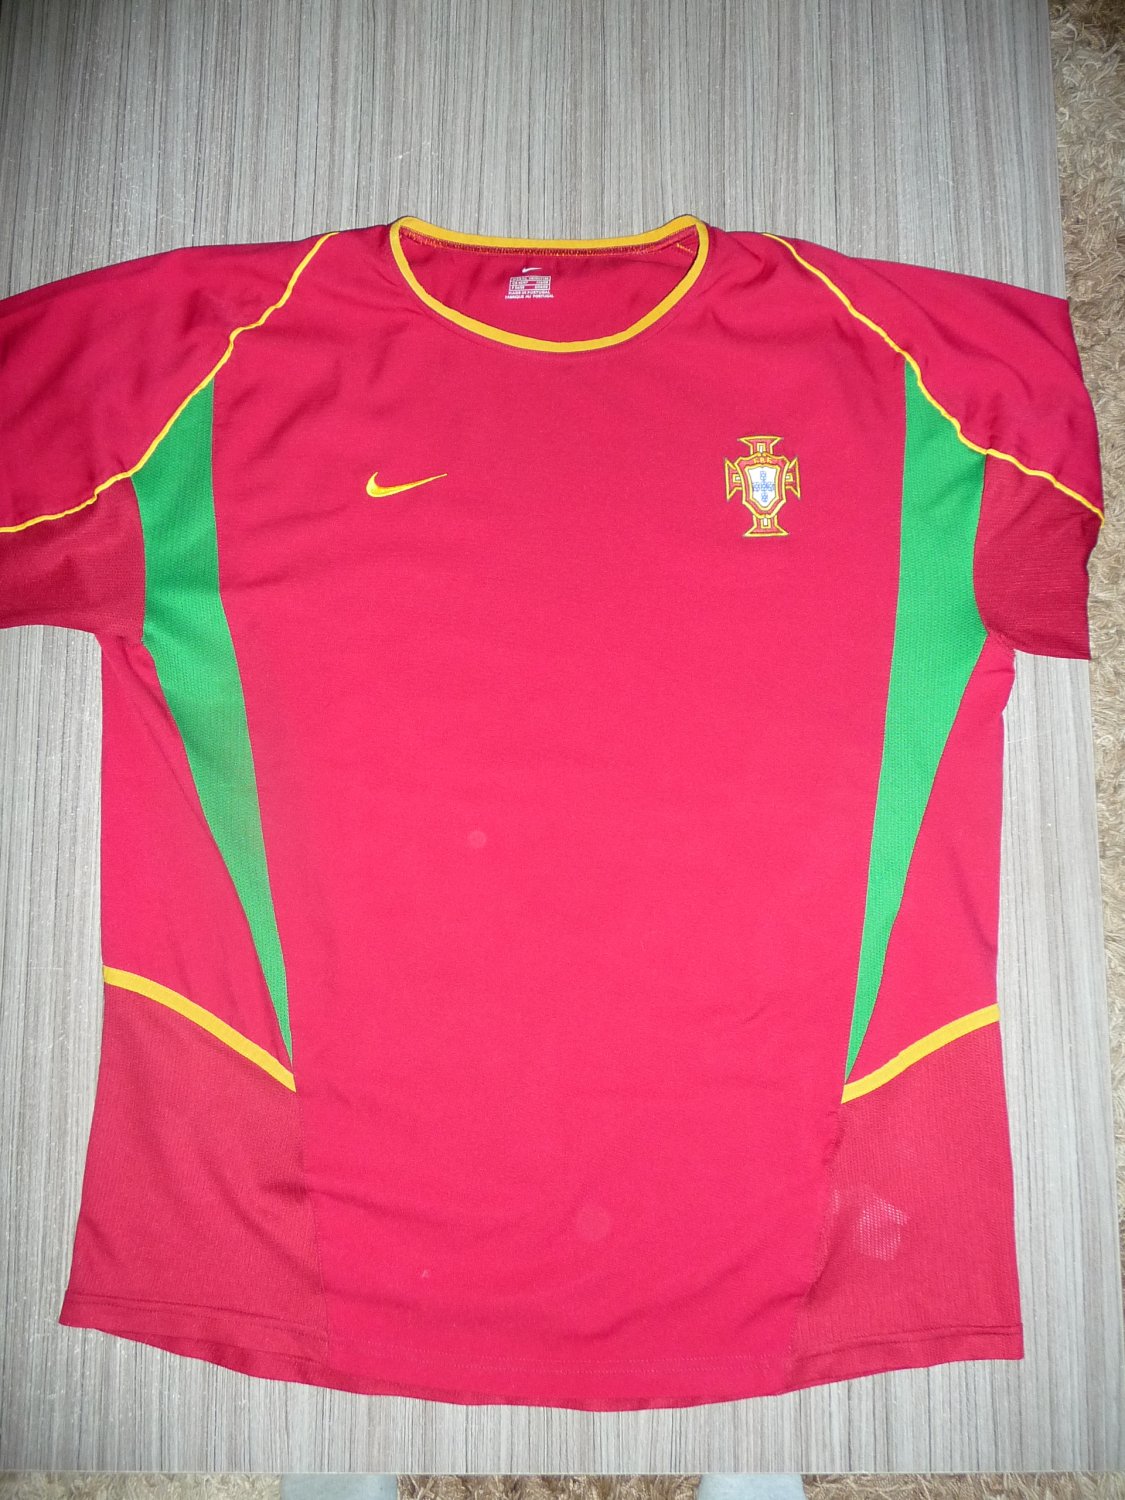 Portugal Home football shirt 2002 - 2004.